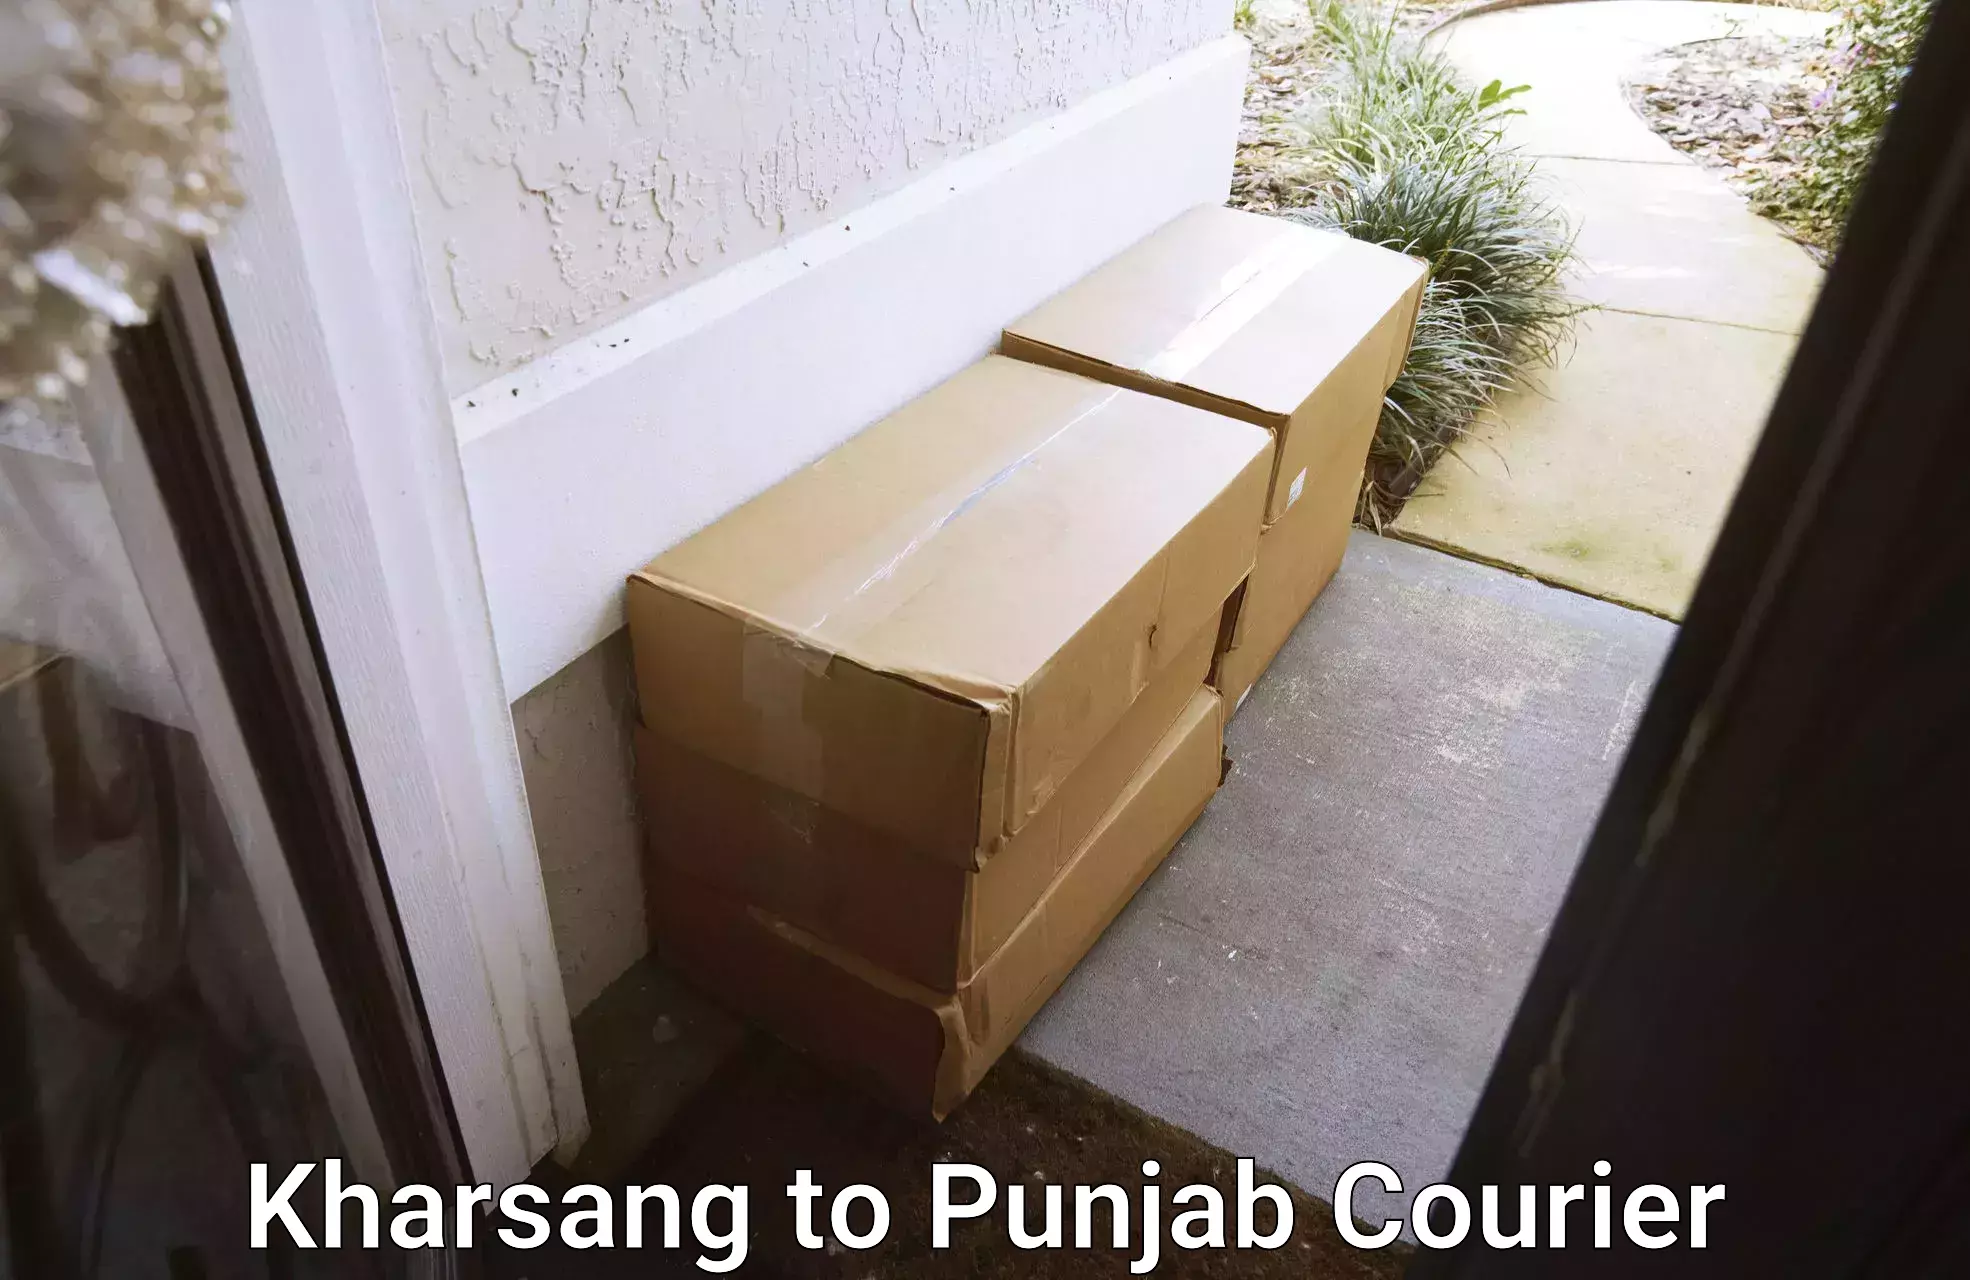 Delivery service partnership Kharsang to Punjab